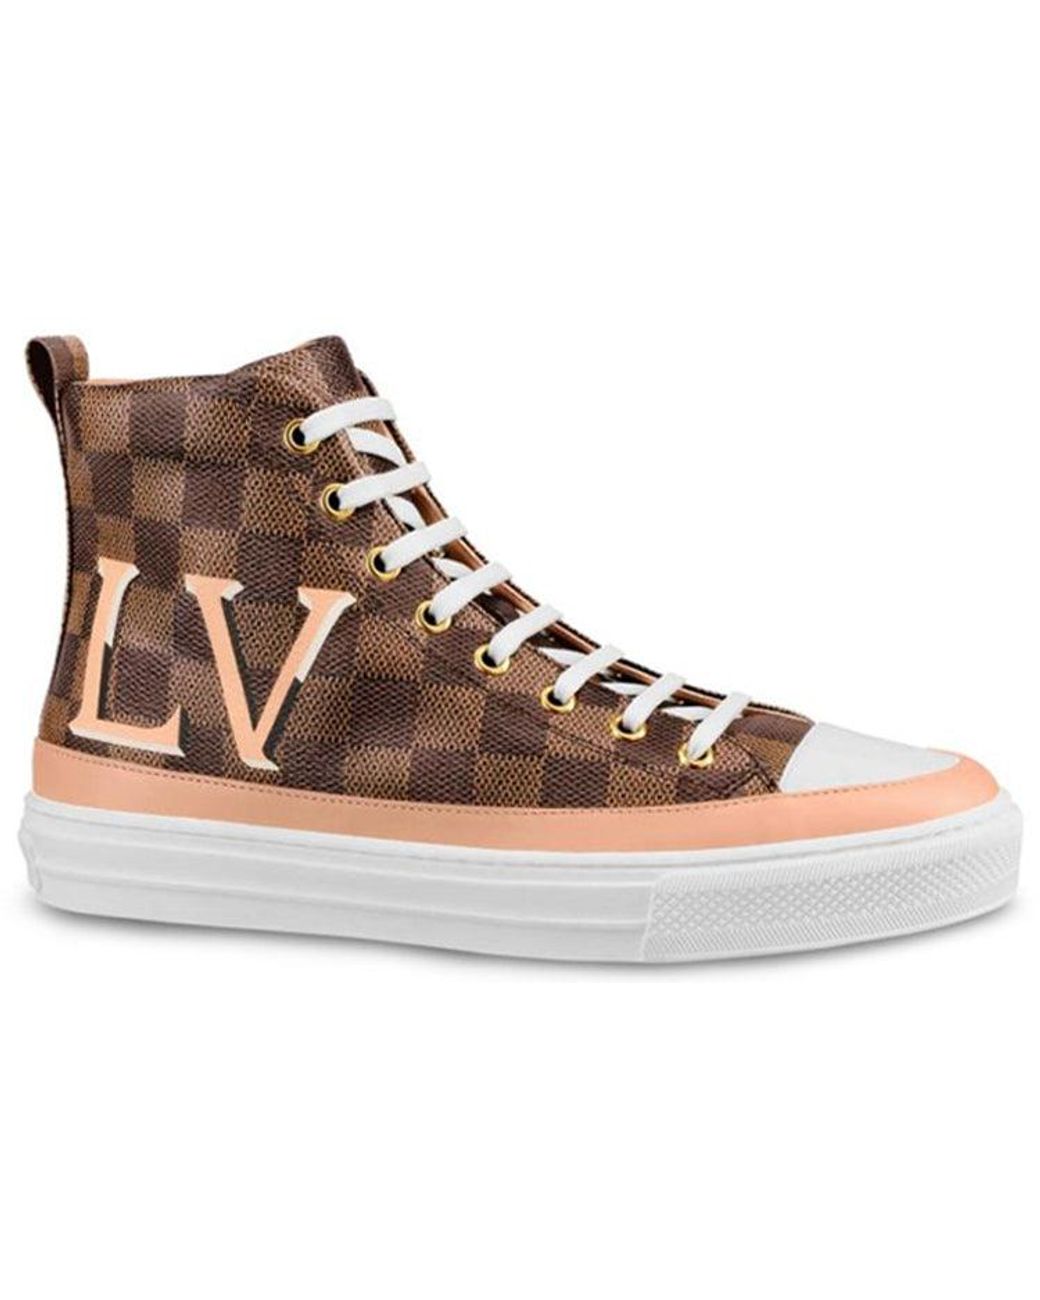 Women's Louis Vuitton Sneakers from $971